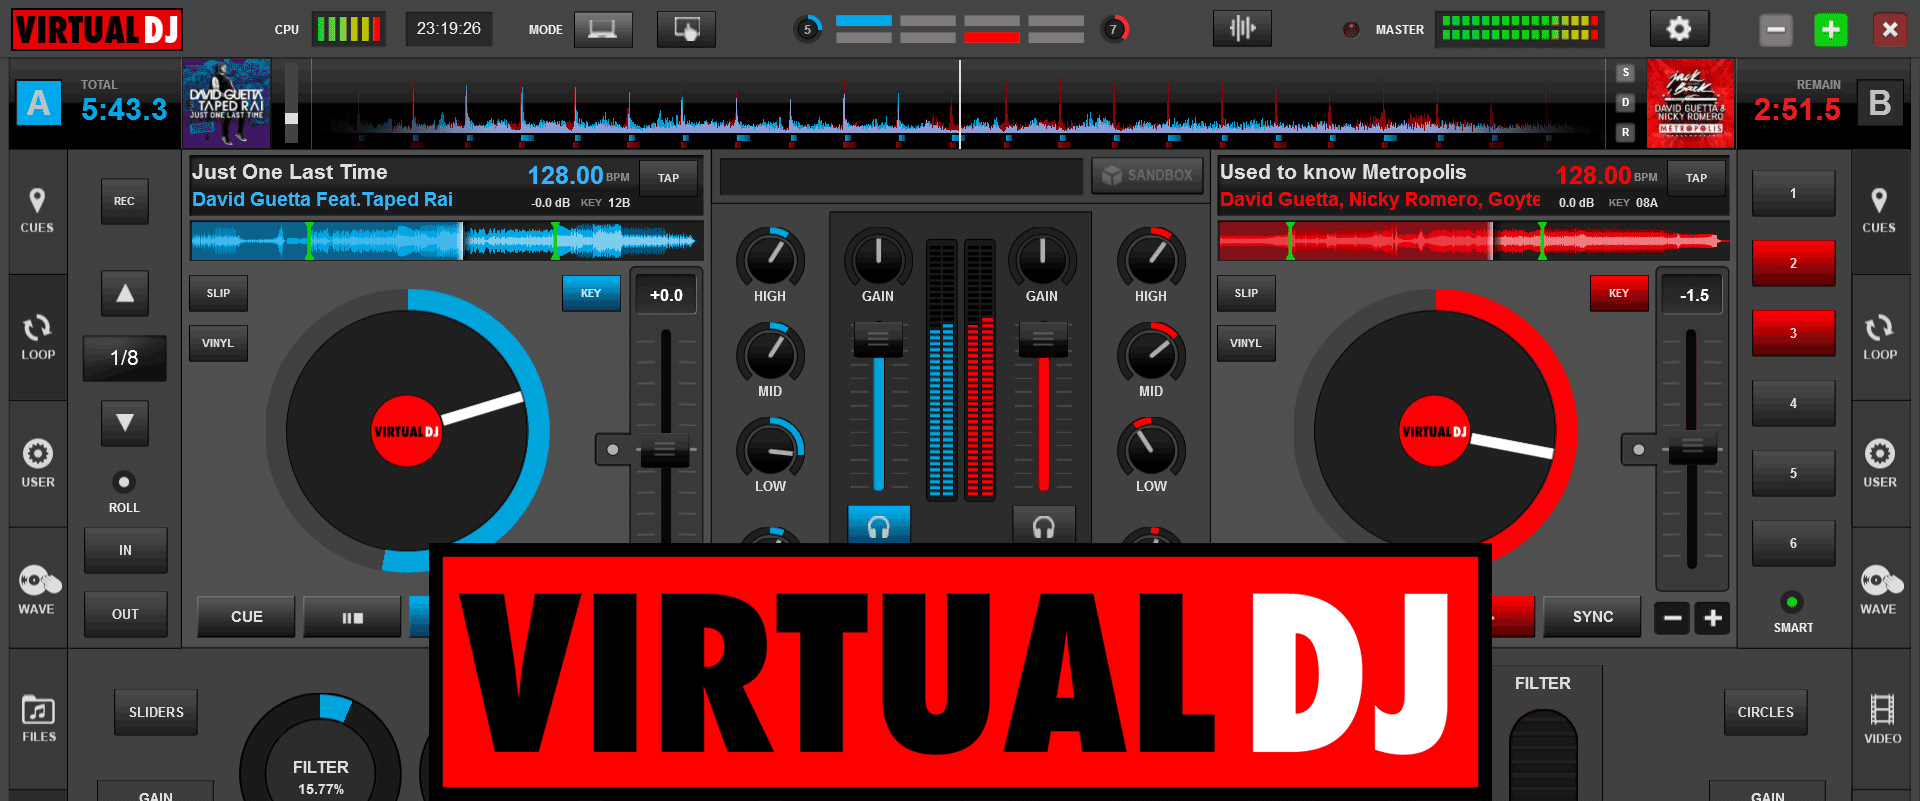 Virtual Dj Professional 5. 0 Free Download